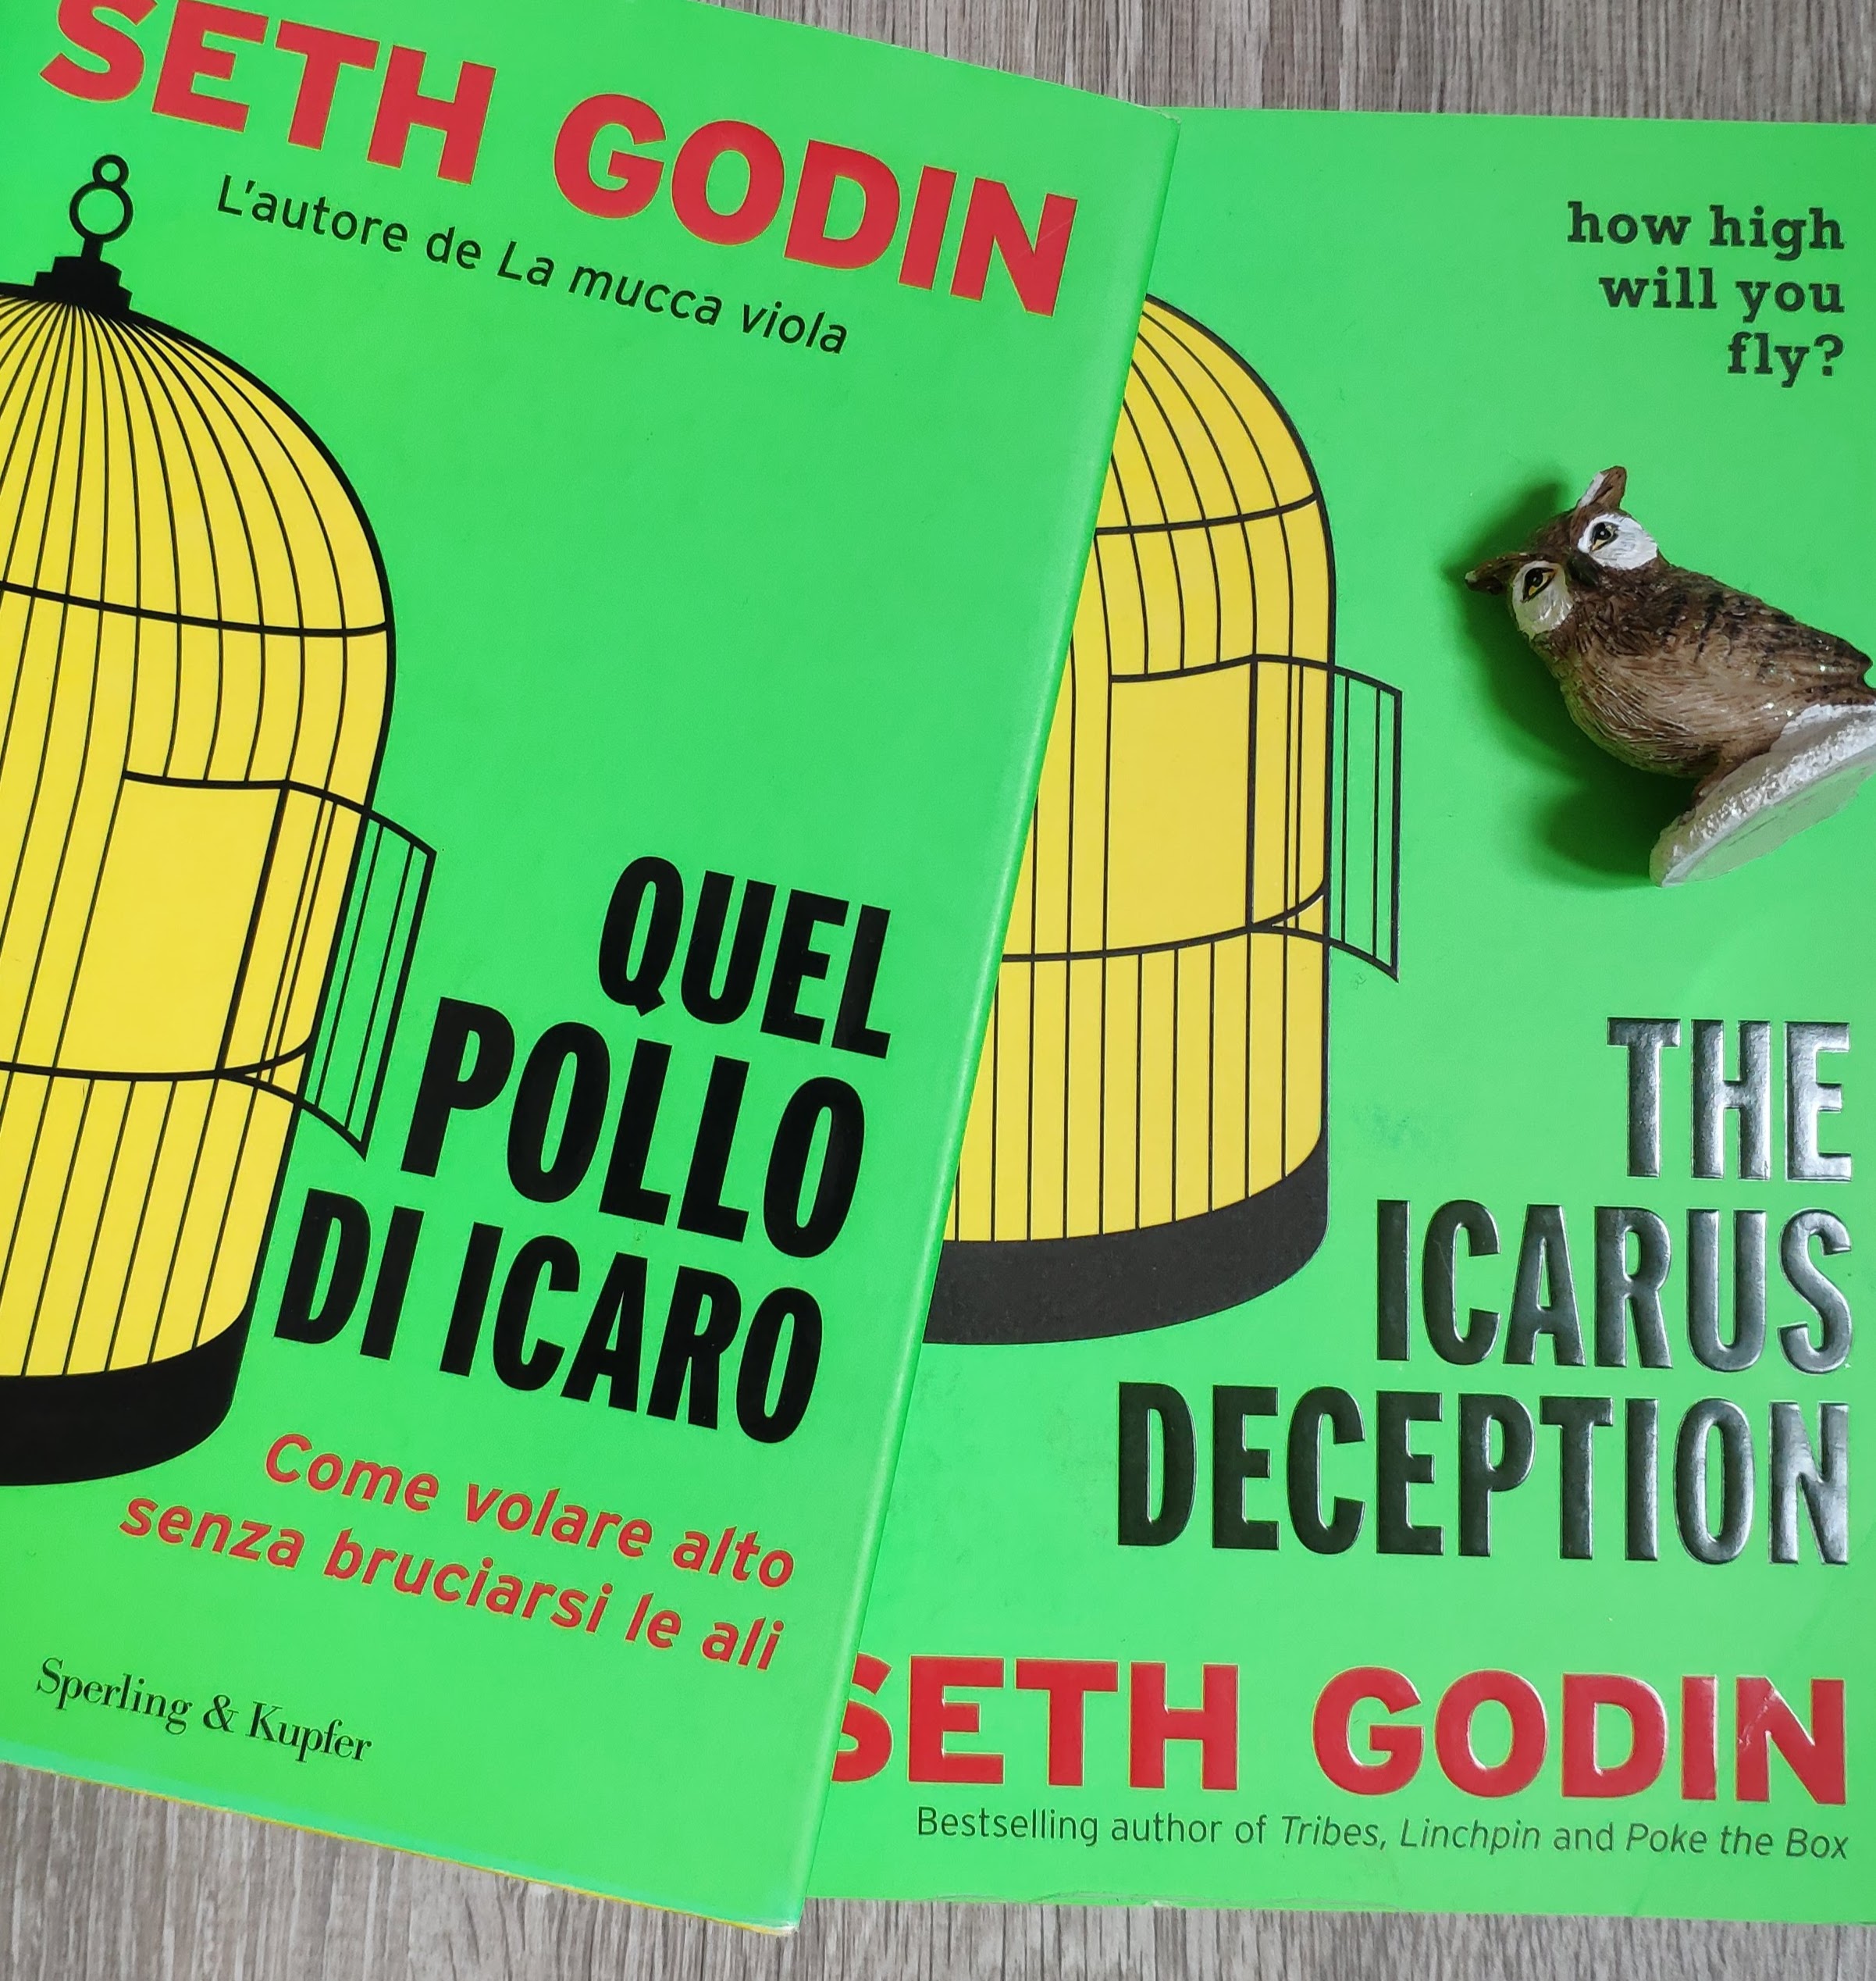 Icarus, pt. 1 – Seth Godin